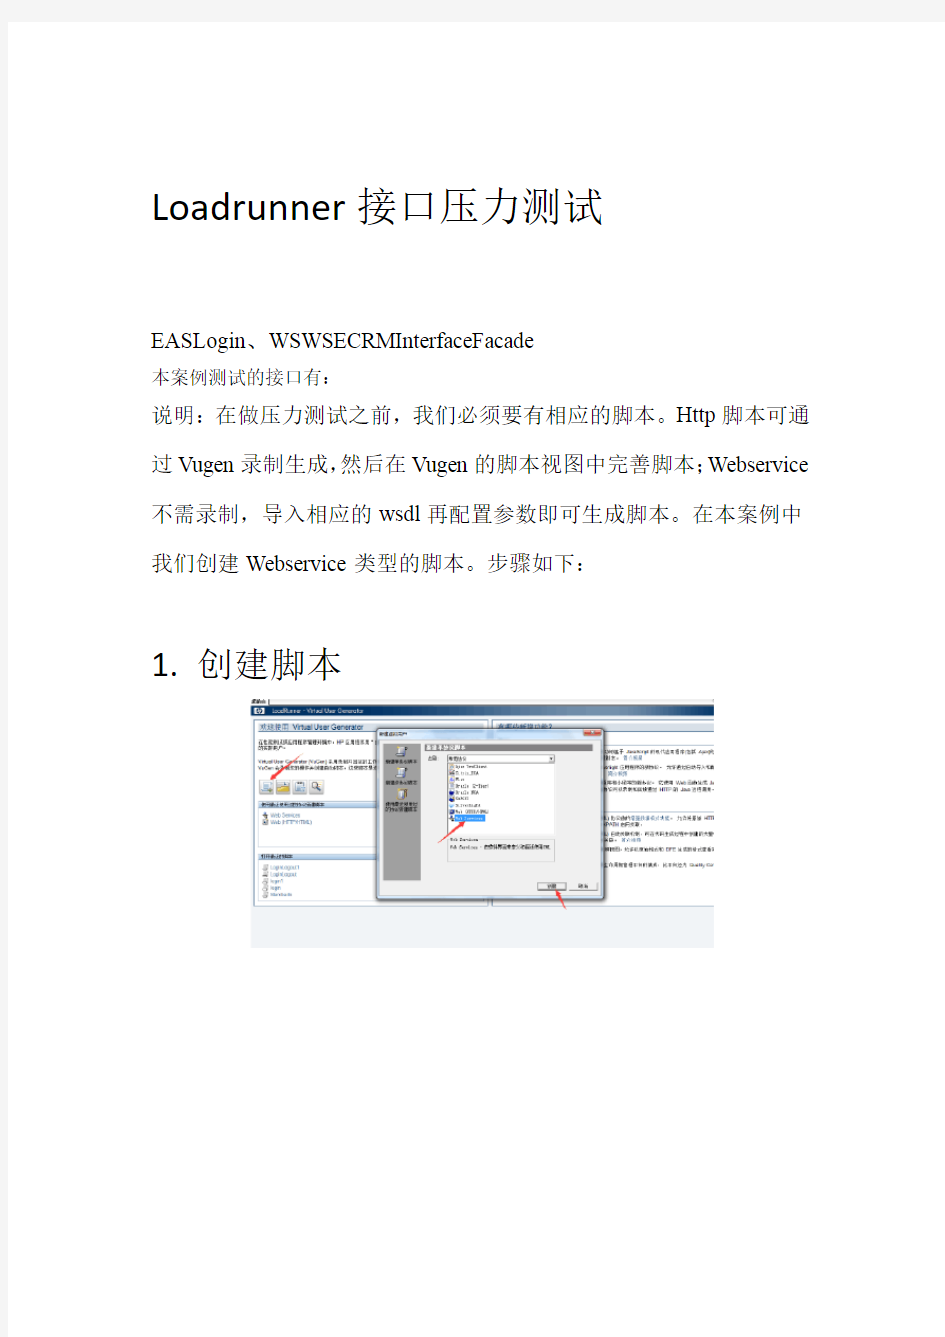 Loadrunner接口压力测试步骤